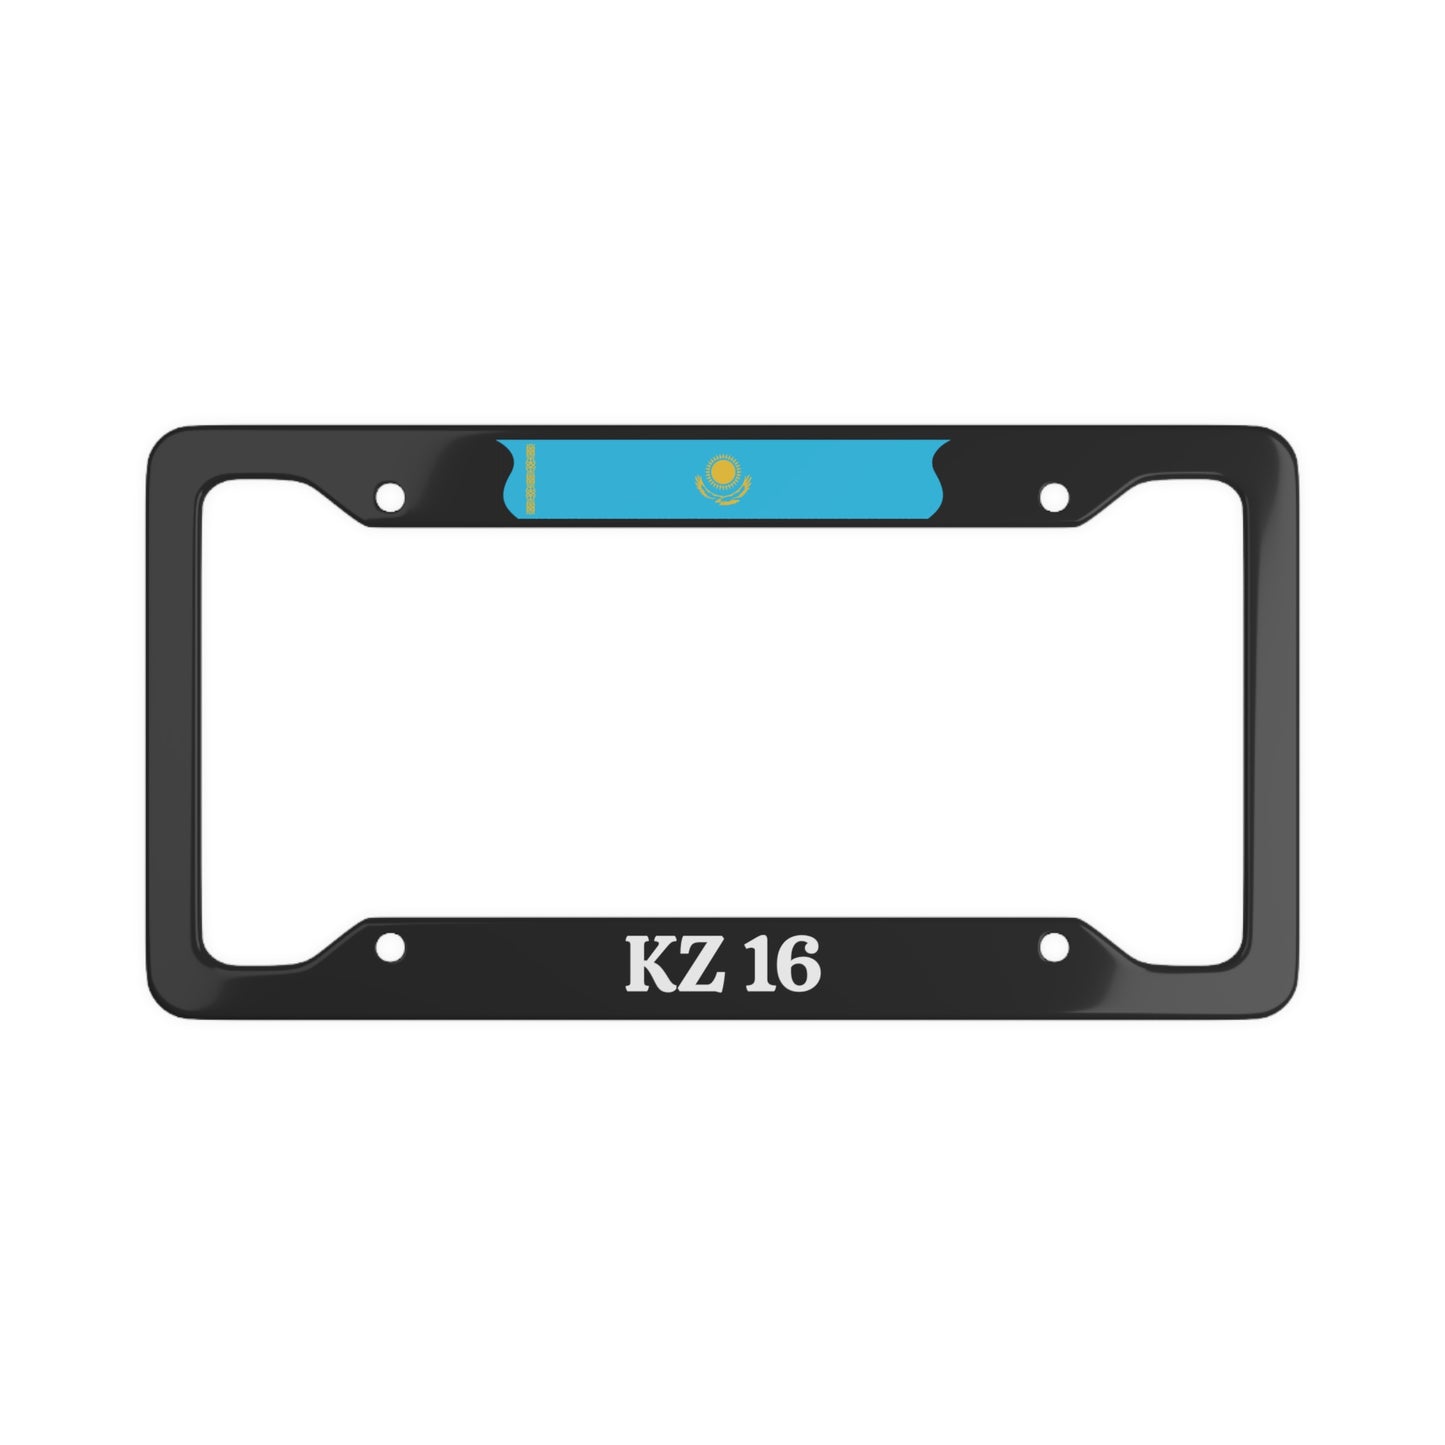 KZ 16 License Plate Frame